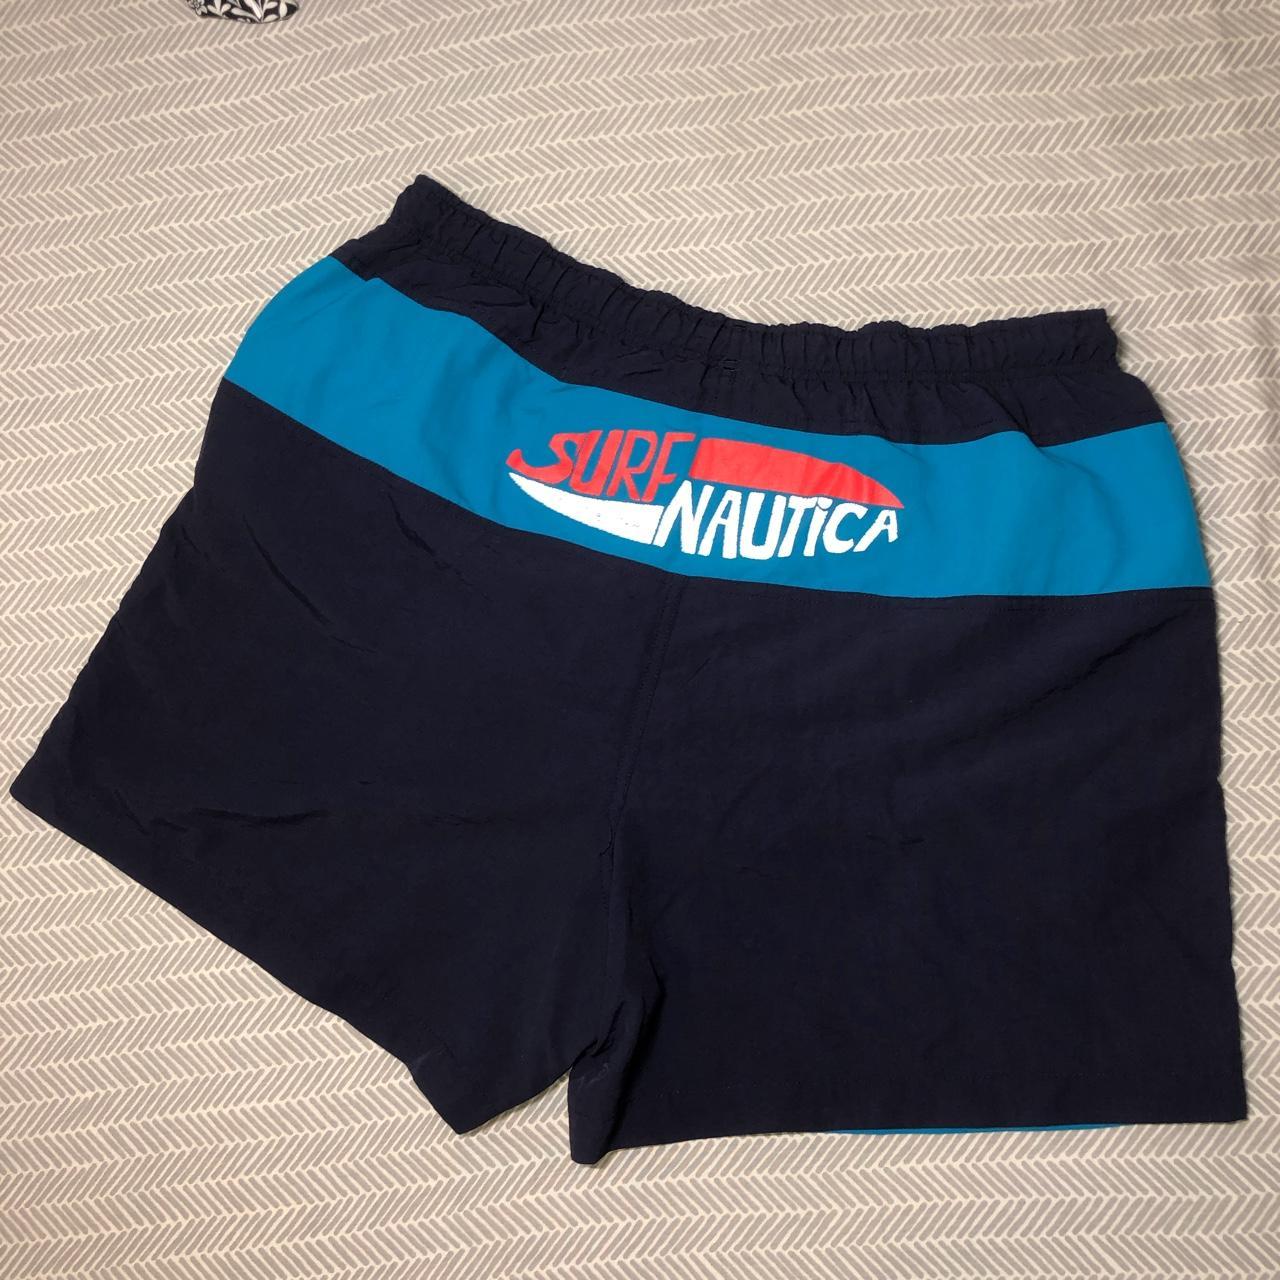 Nautica Men's Navy and Blue Swim-briefs-shorts - 3